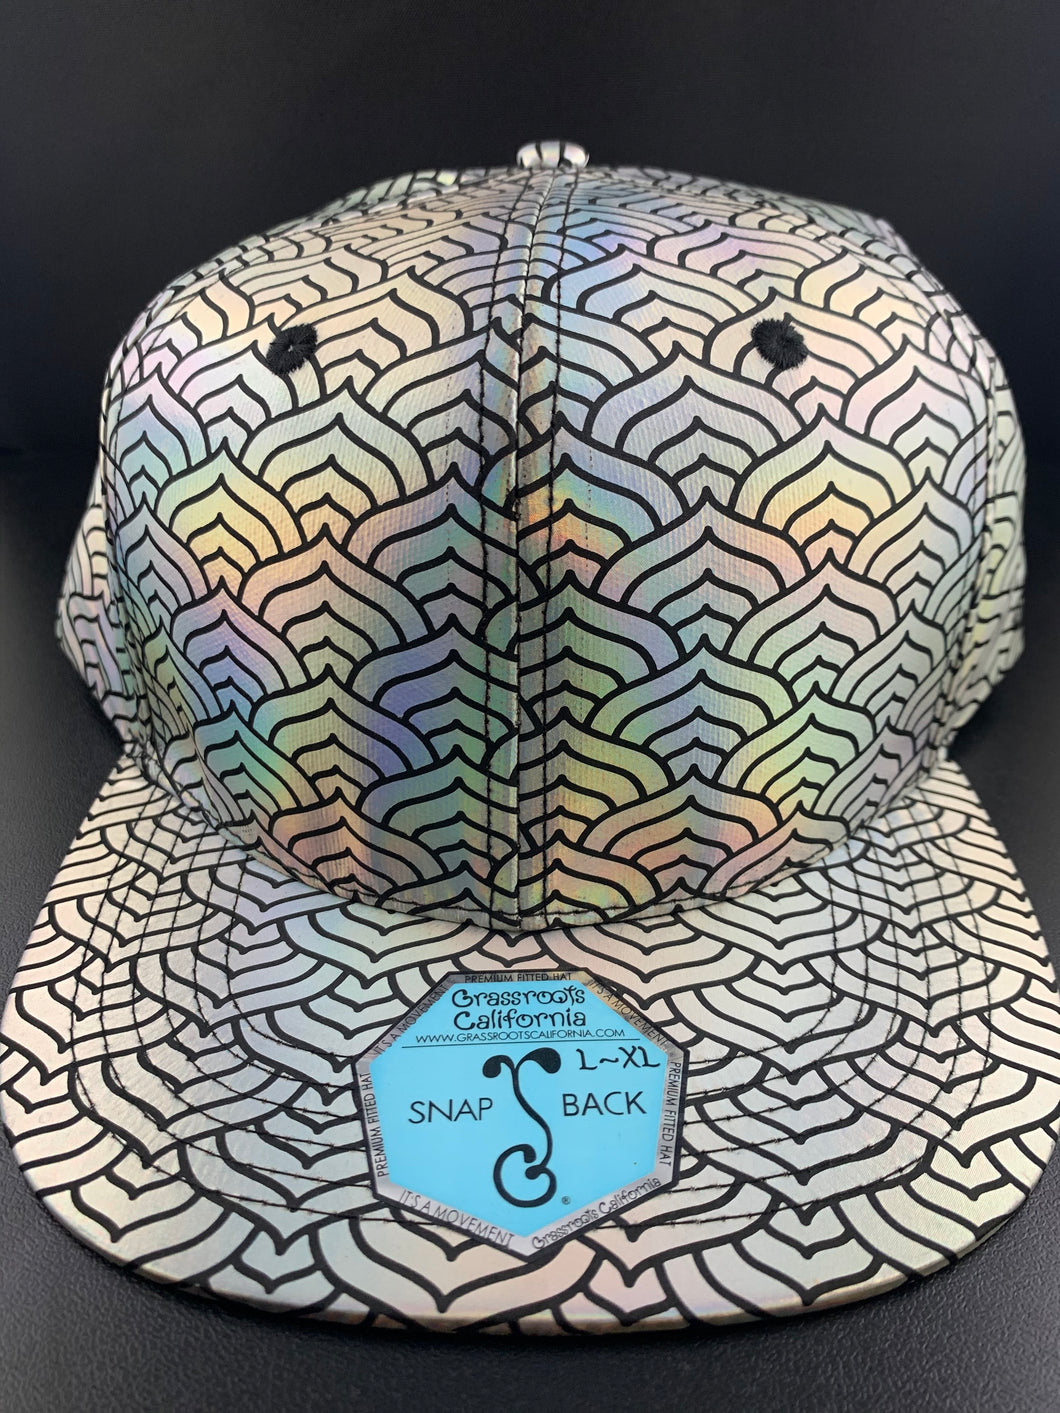 Grassroots California Trippy Reflexive Metallic Mendalla Snap Back Hat L-LX